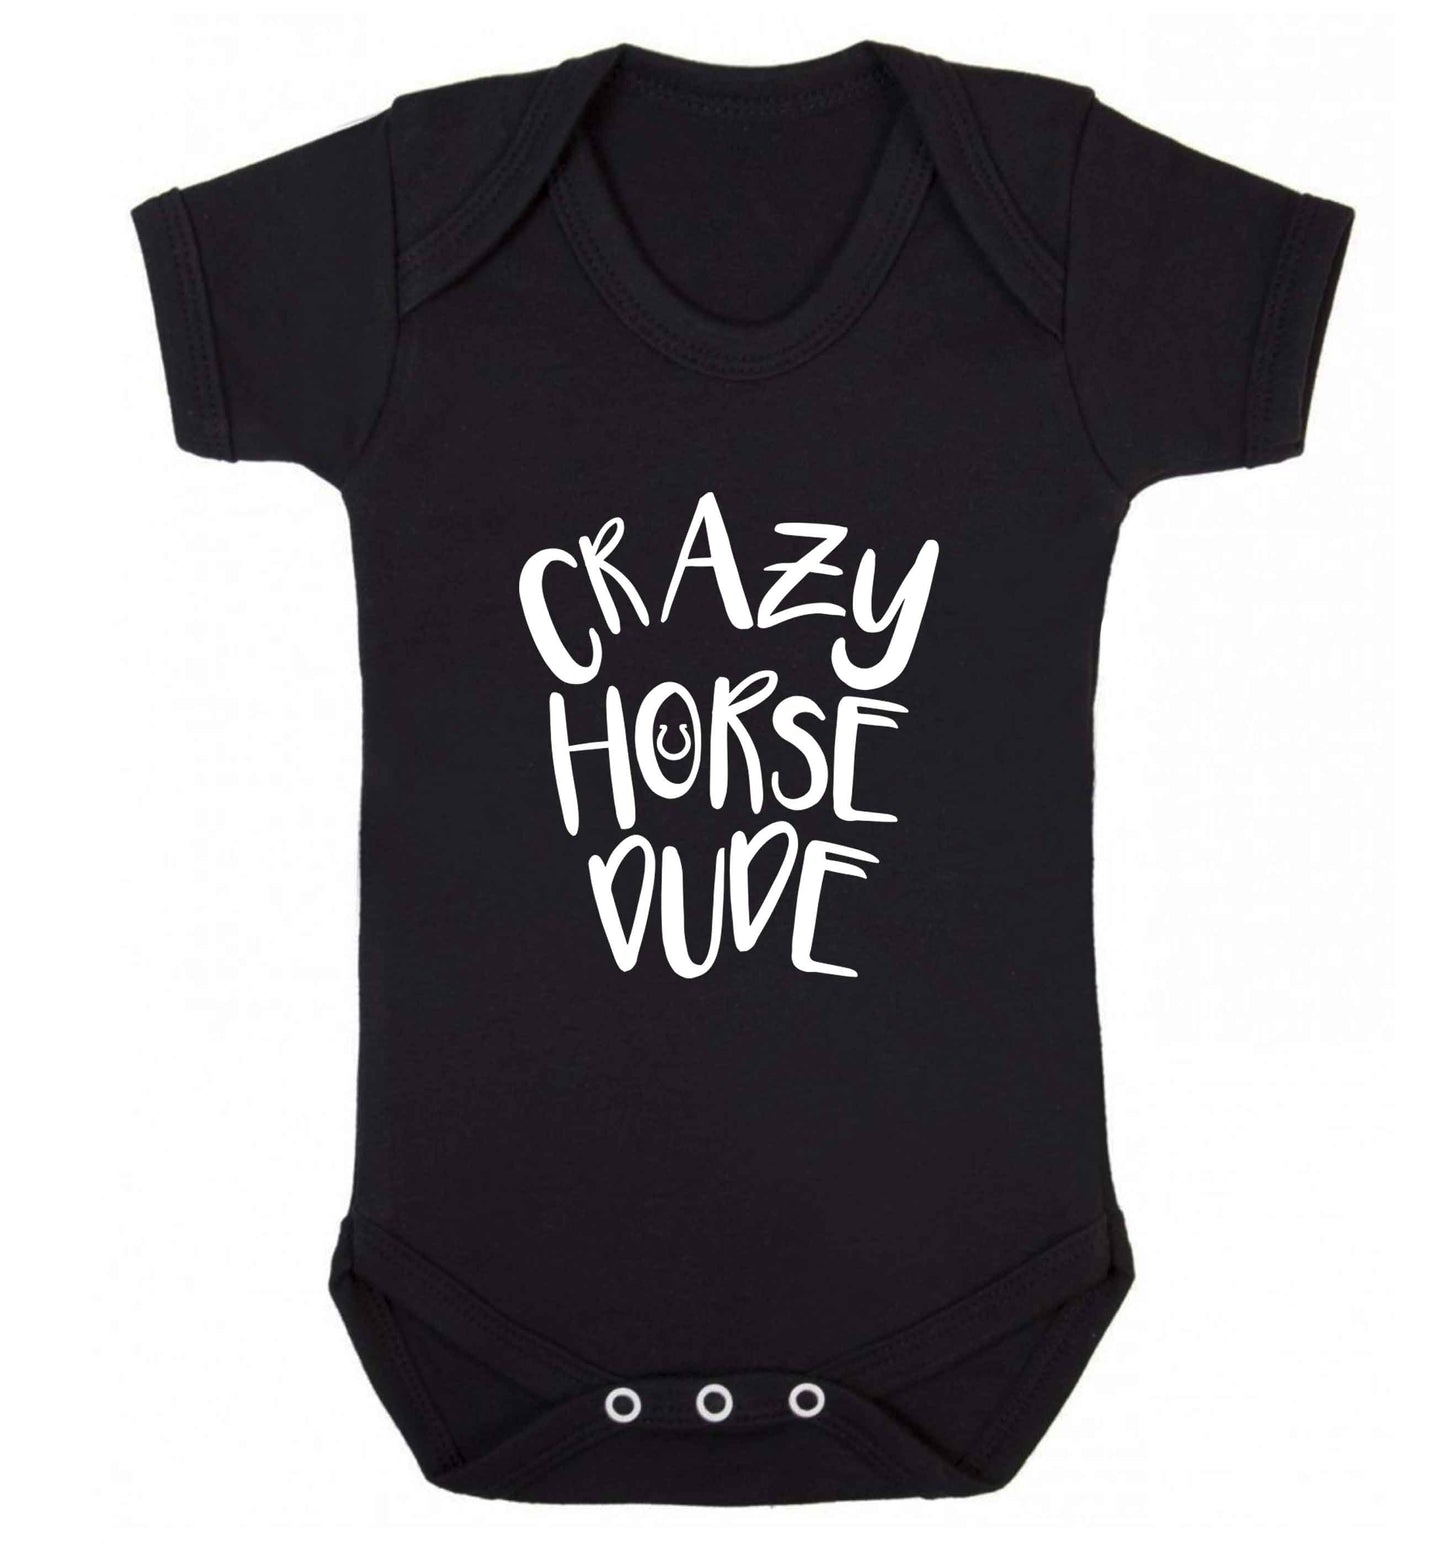 Crazy horse dude baby vest black 18-24 months